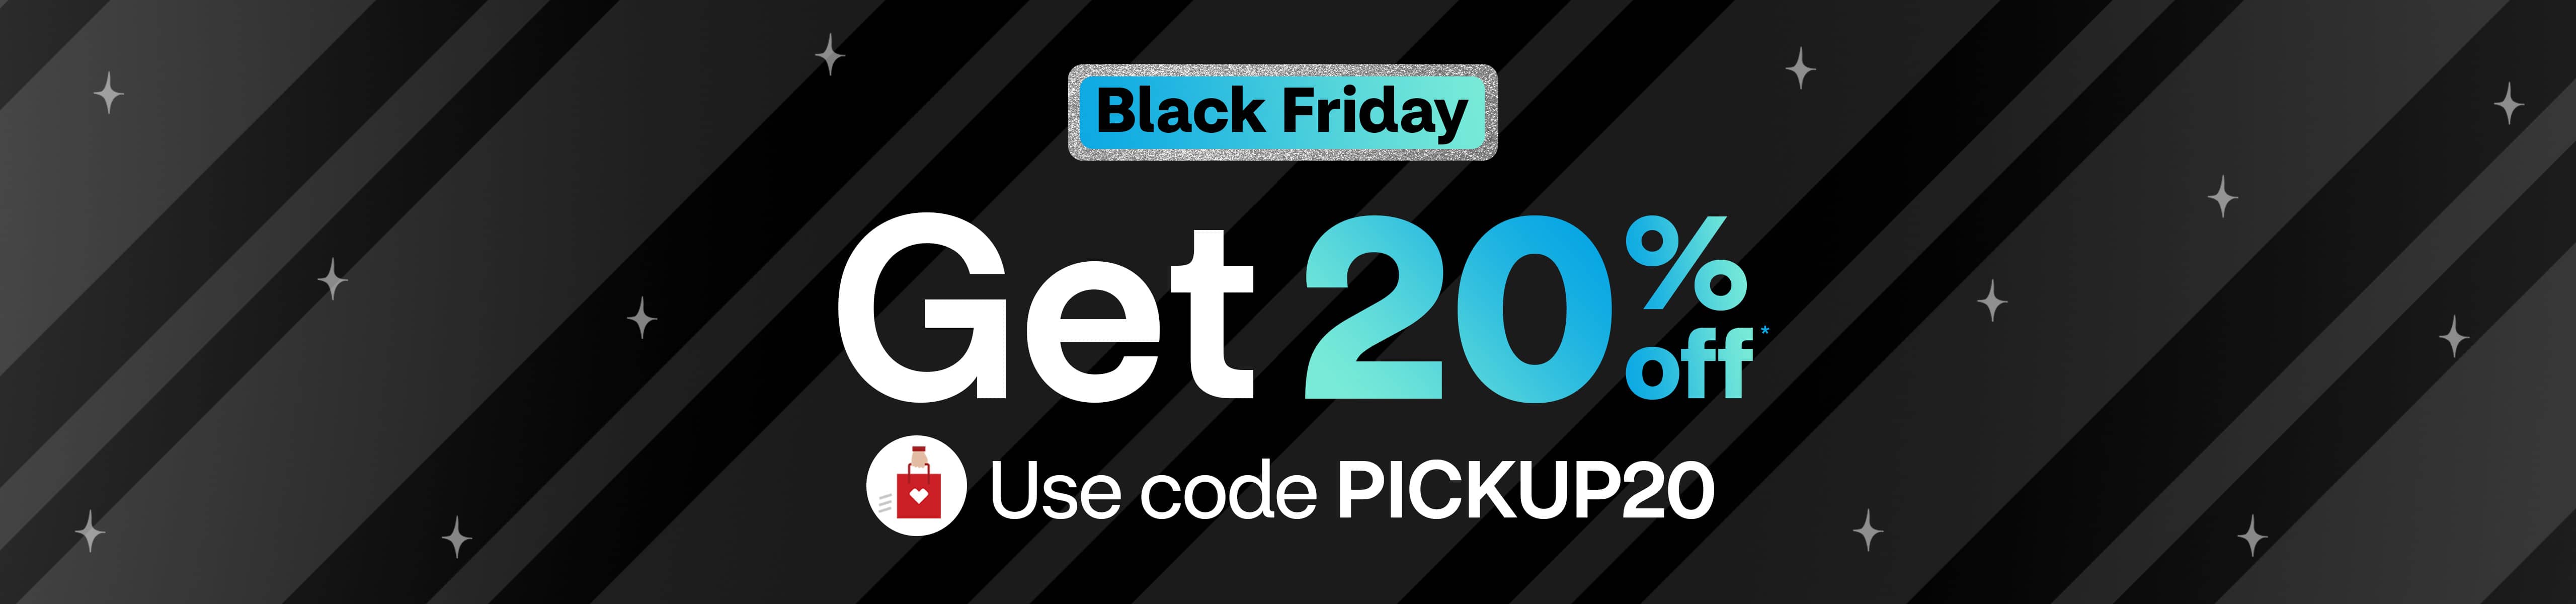 Black Friday, get 20 percent off, use code PICKUP20, pictogram of CVS shopping bag